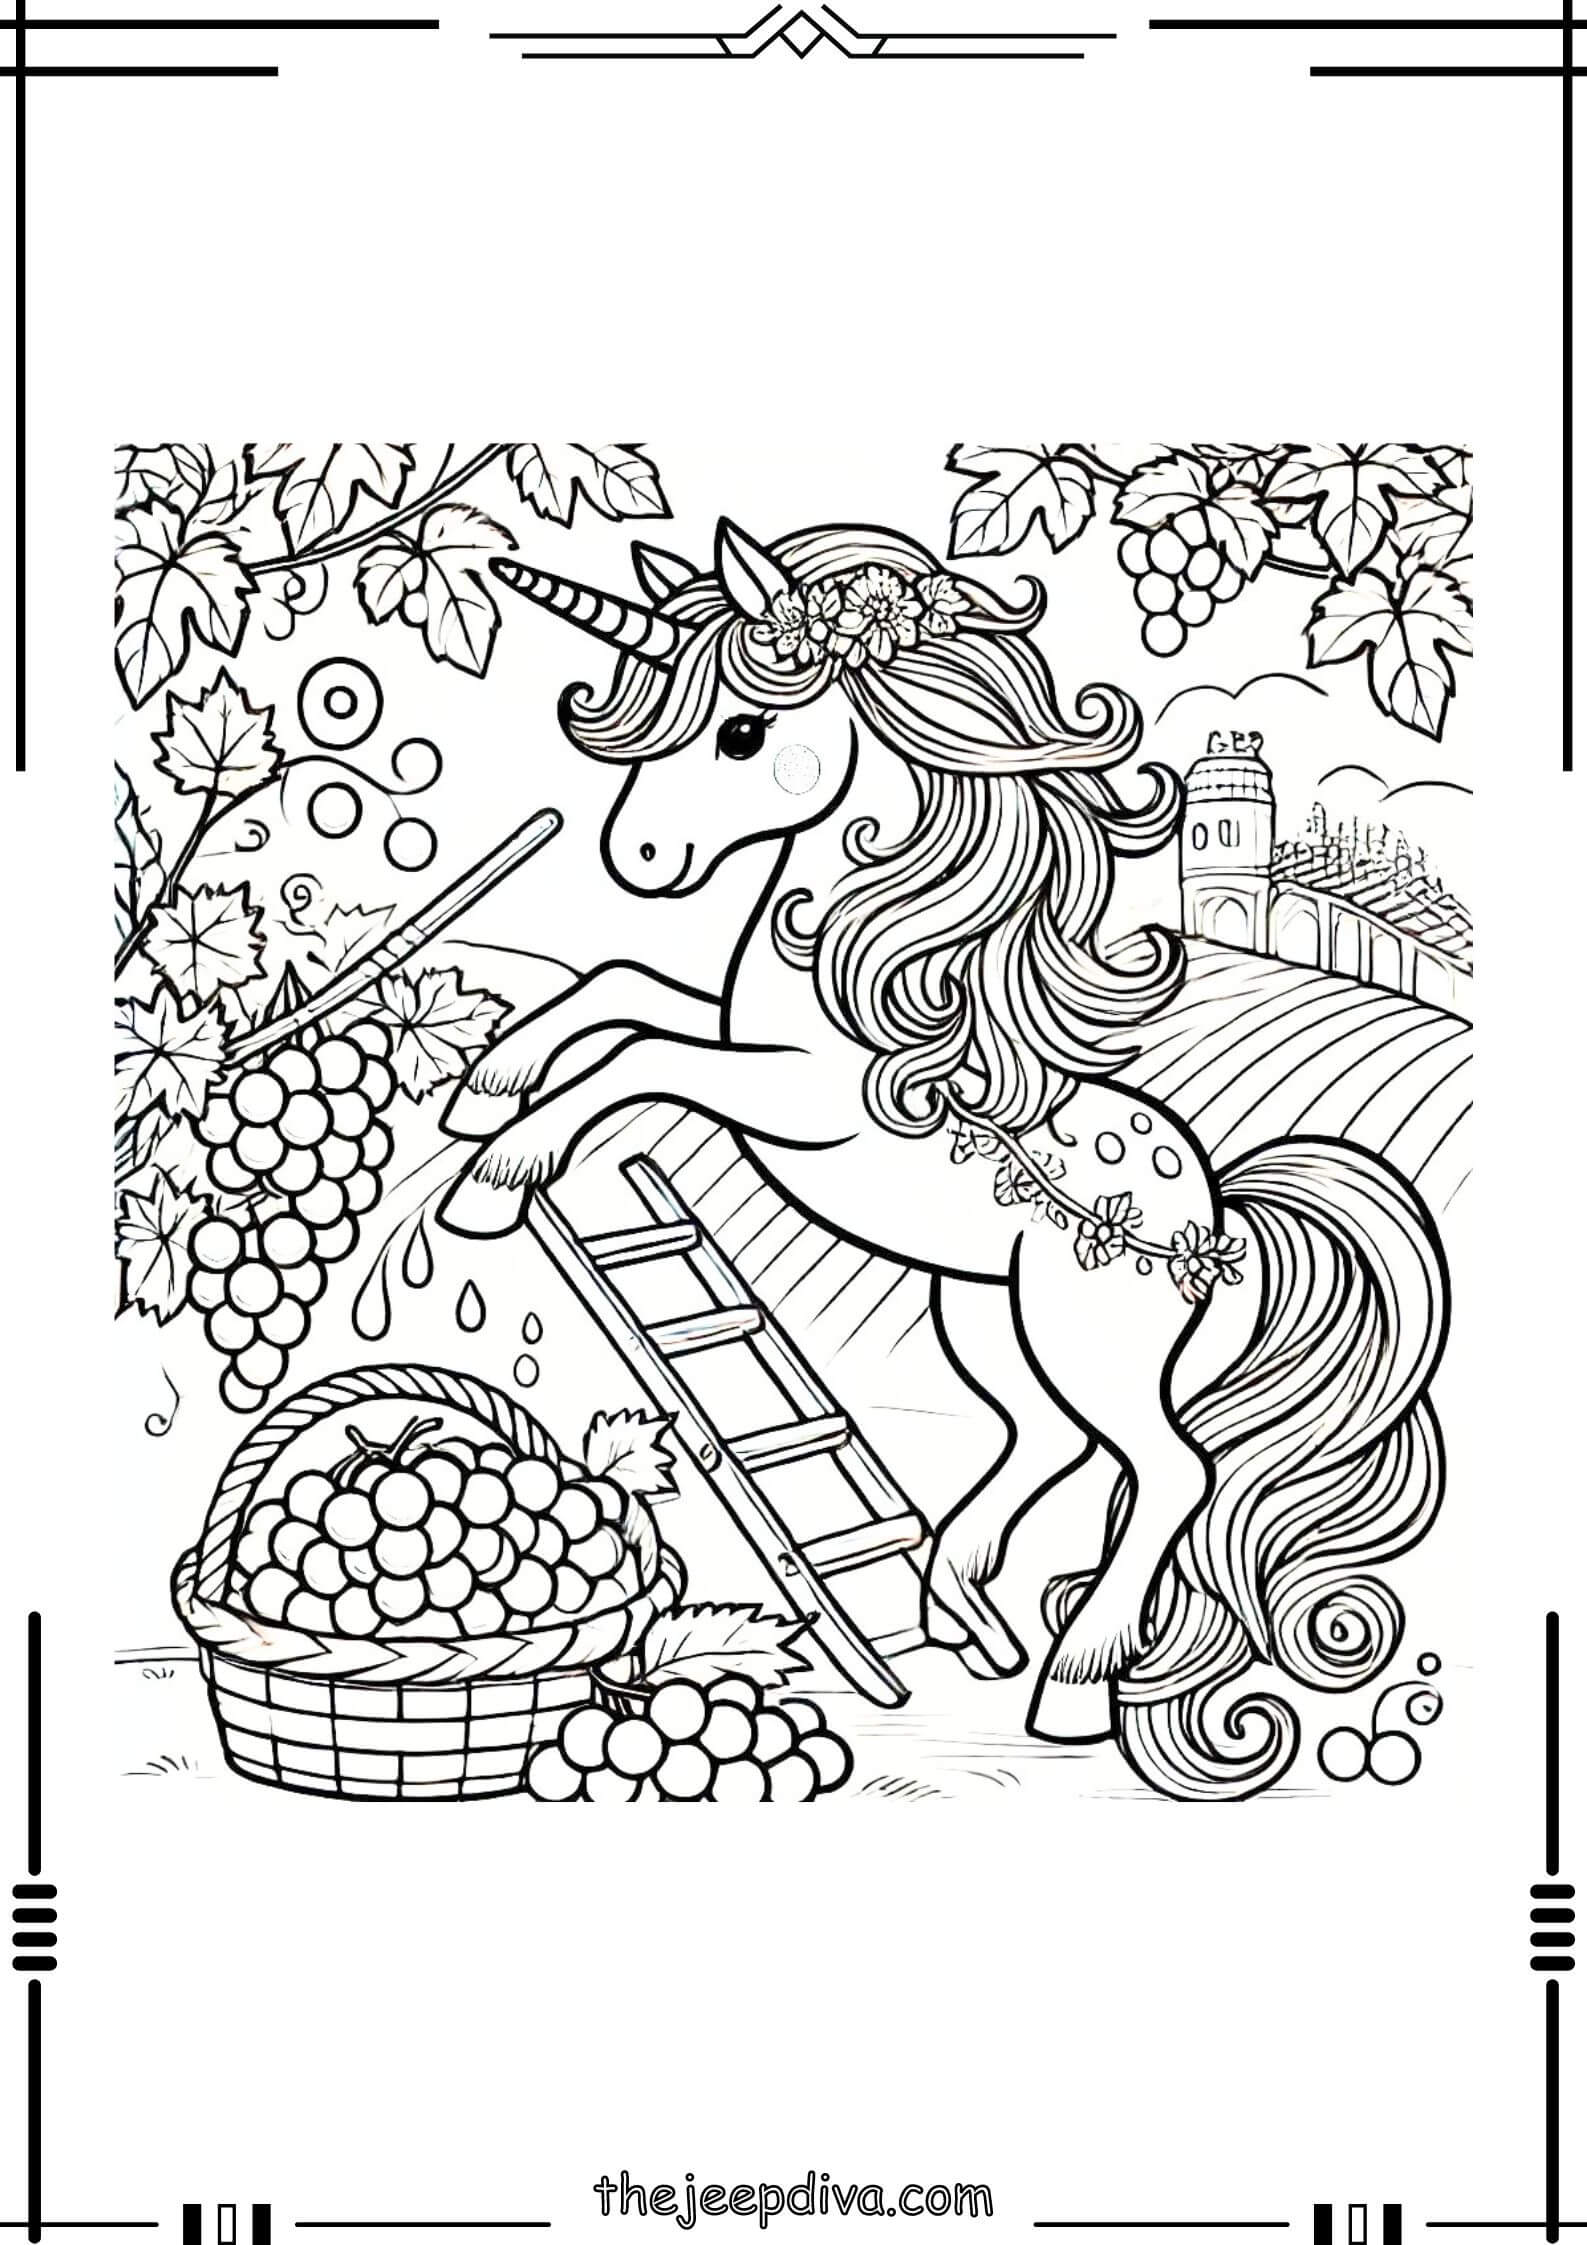 unicorn-coloring-page-hard-15